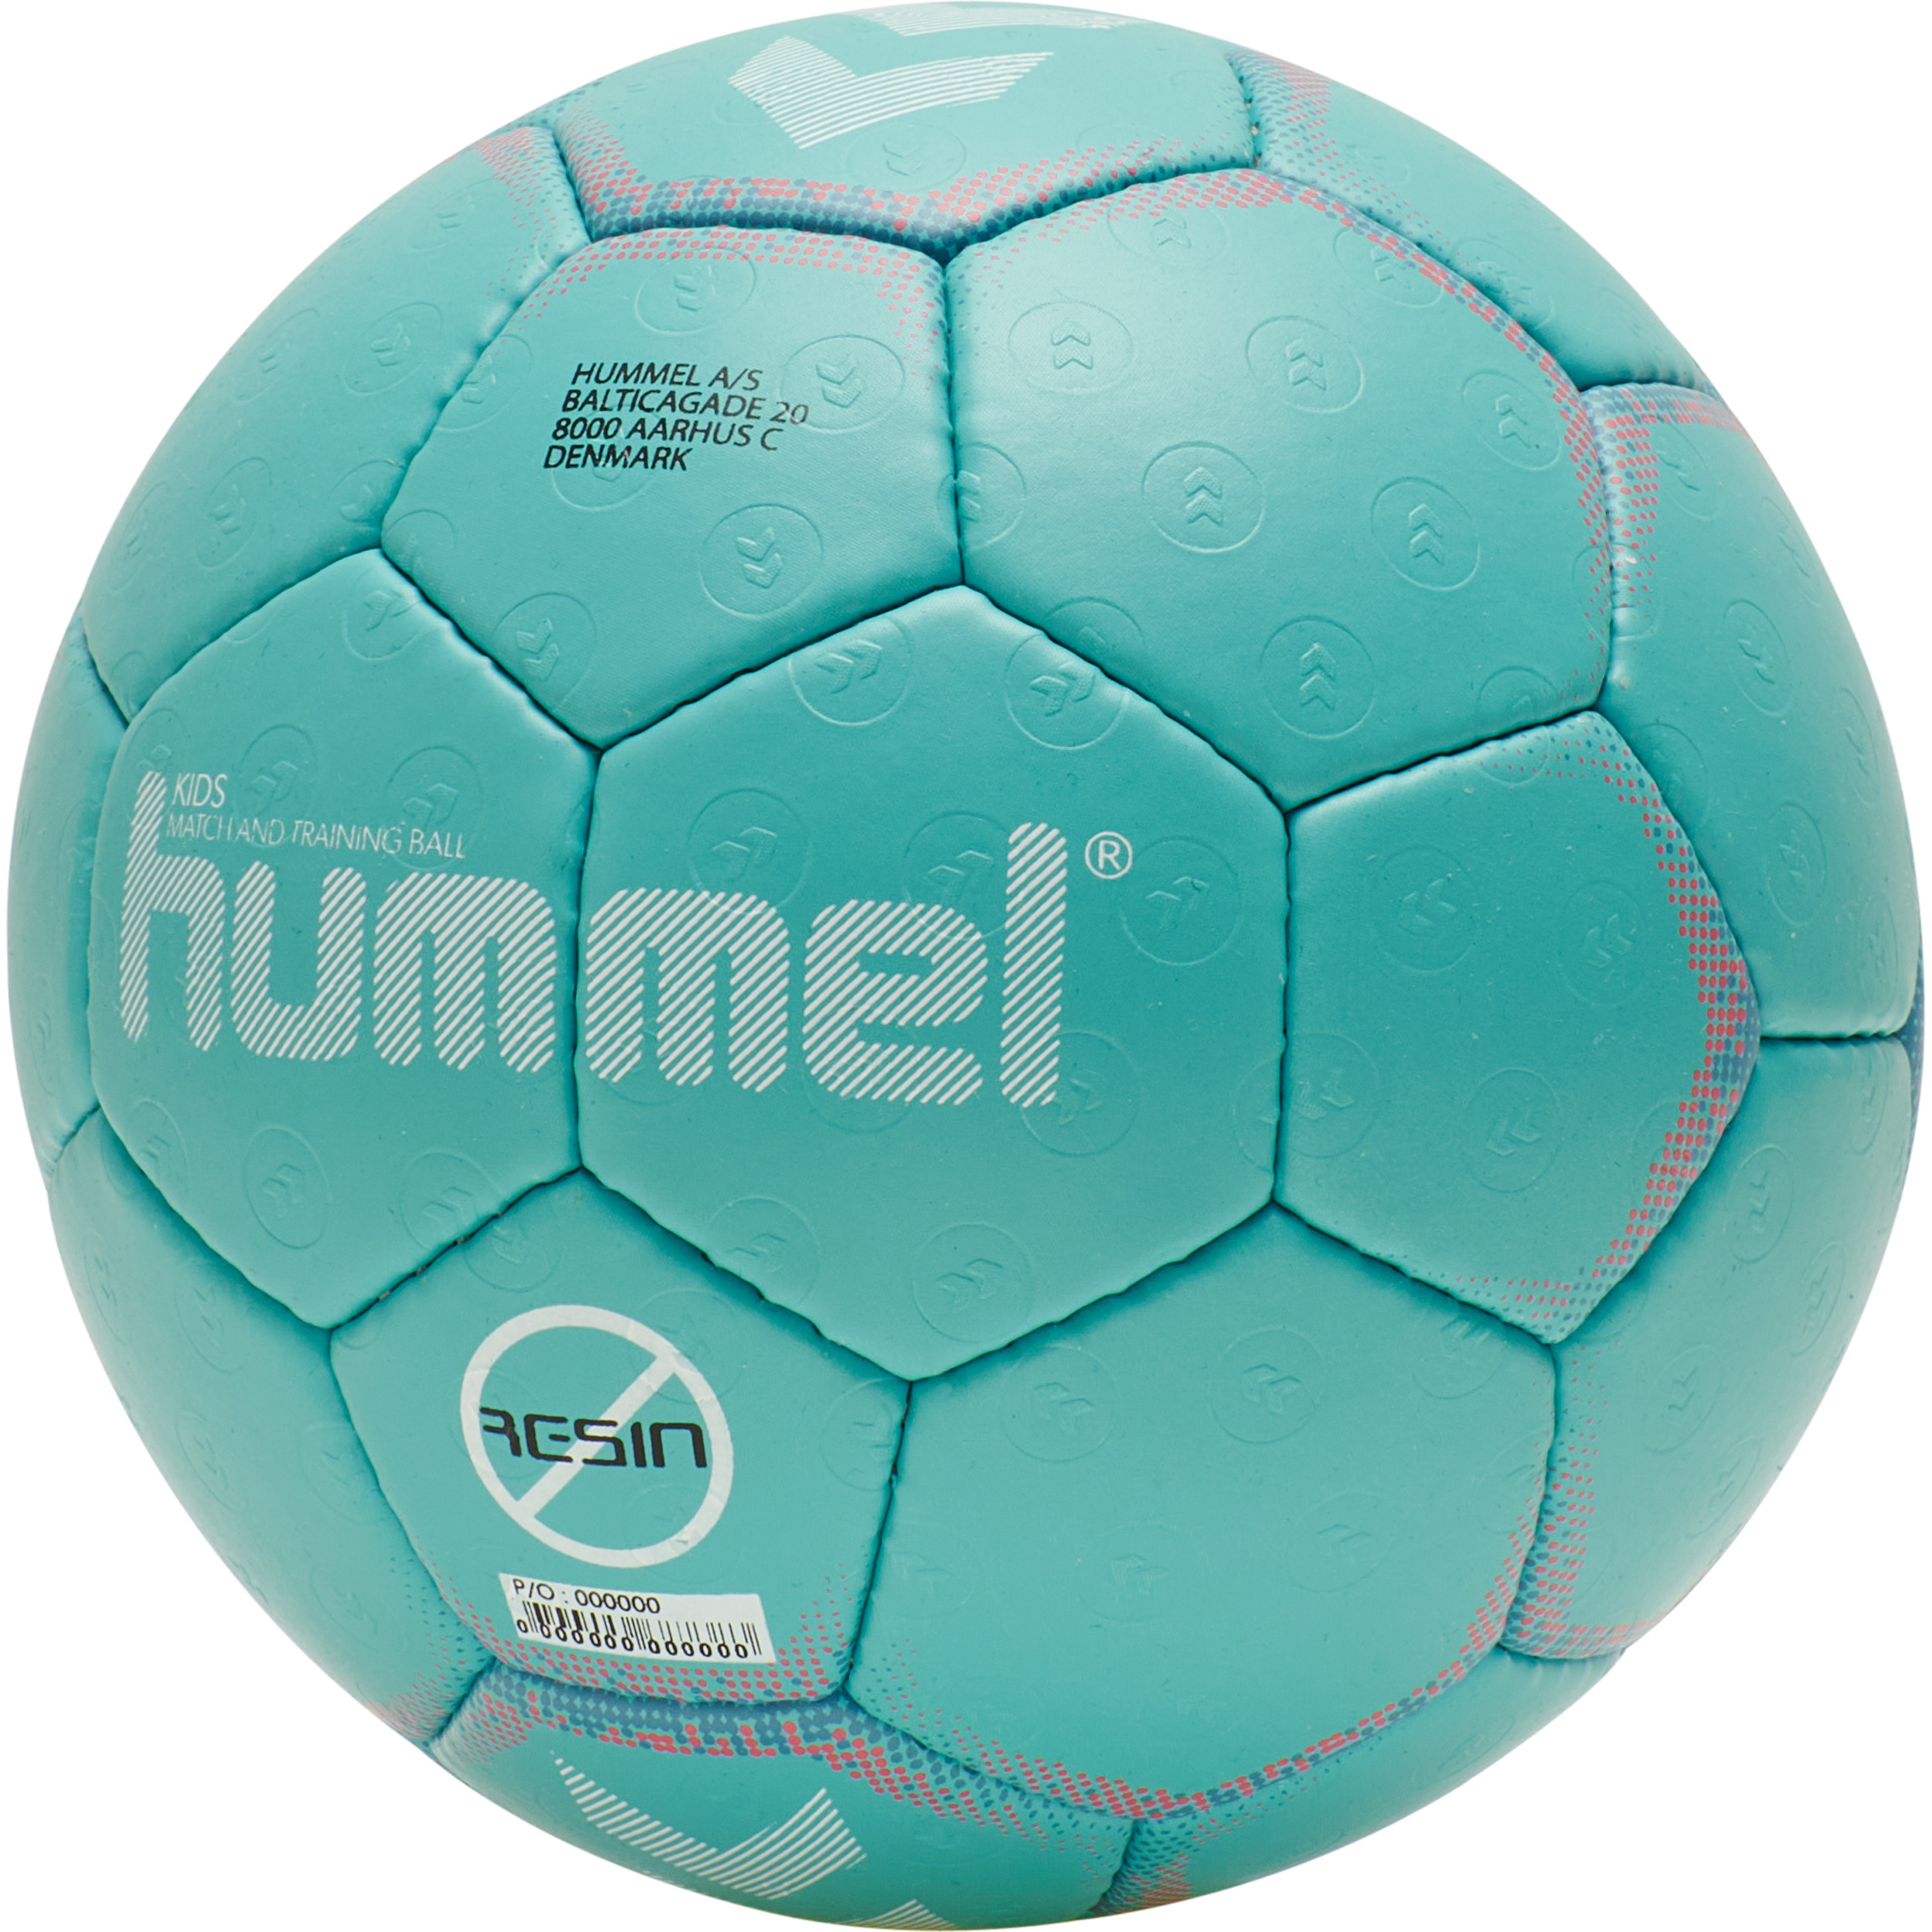 Hummel Handball  Unisex Kinder Lila 212552-4718 